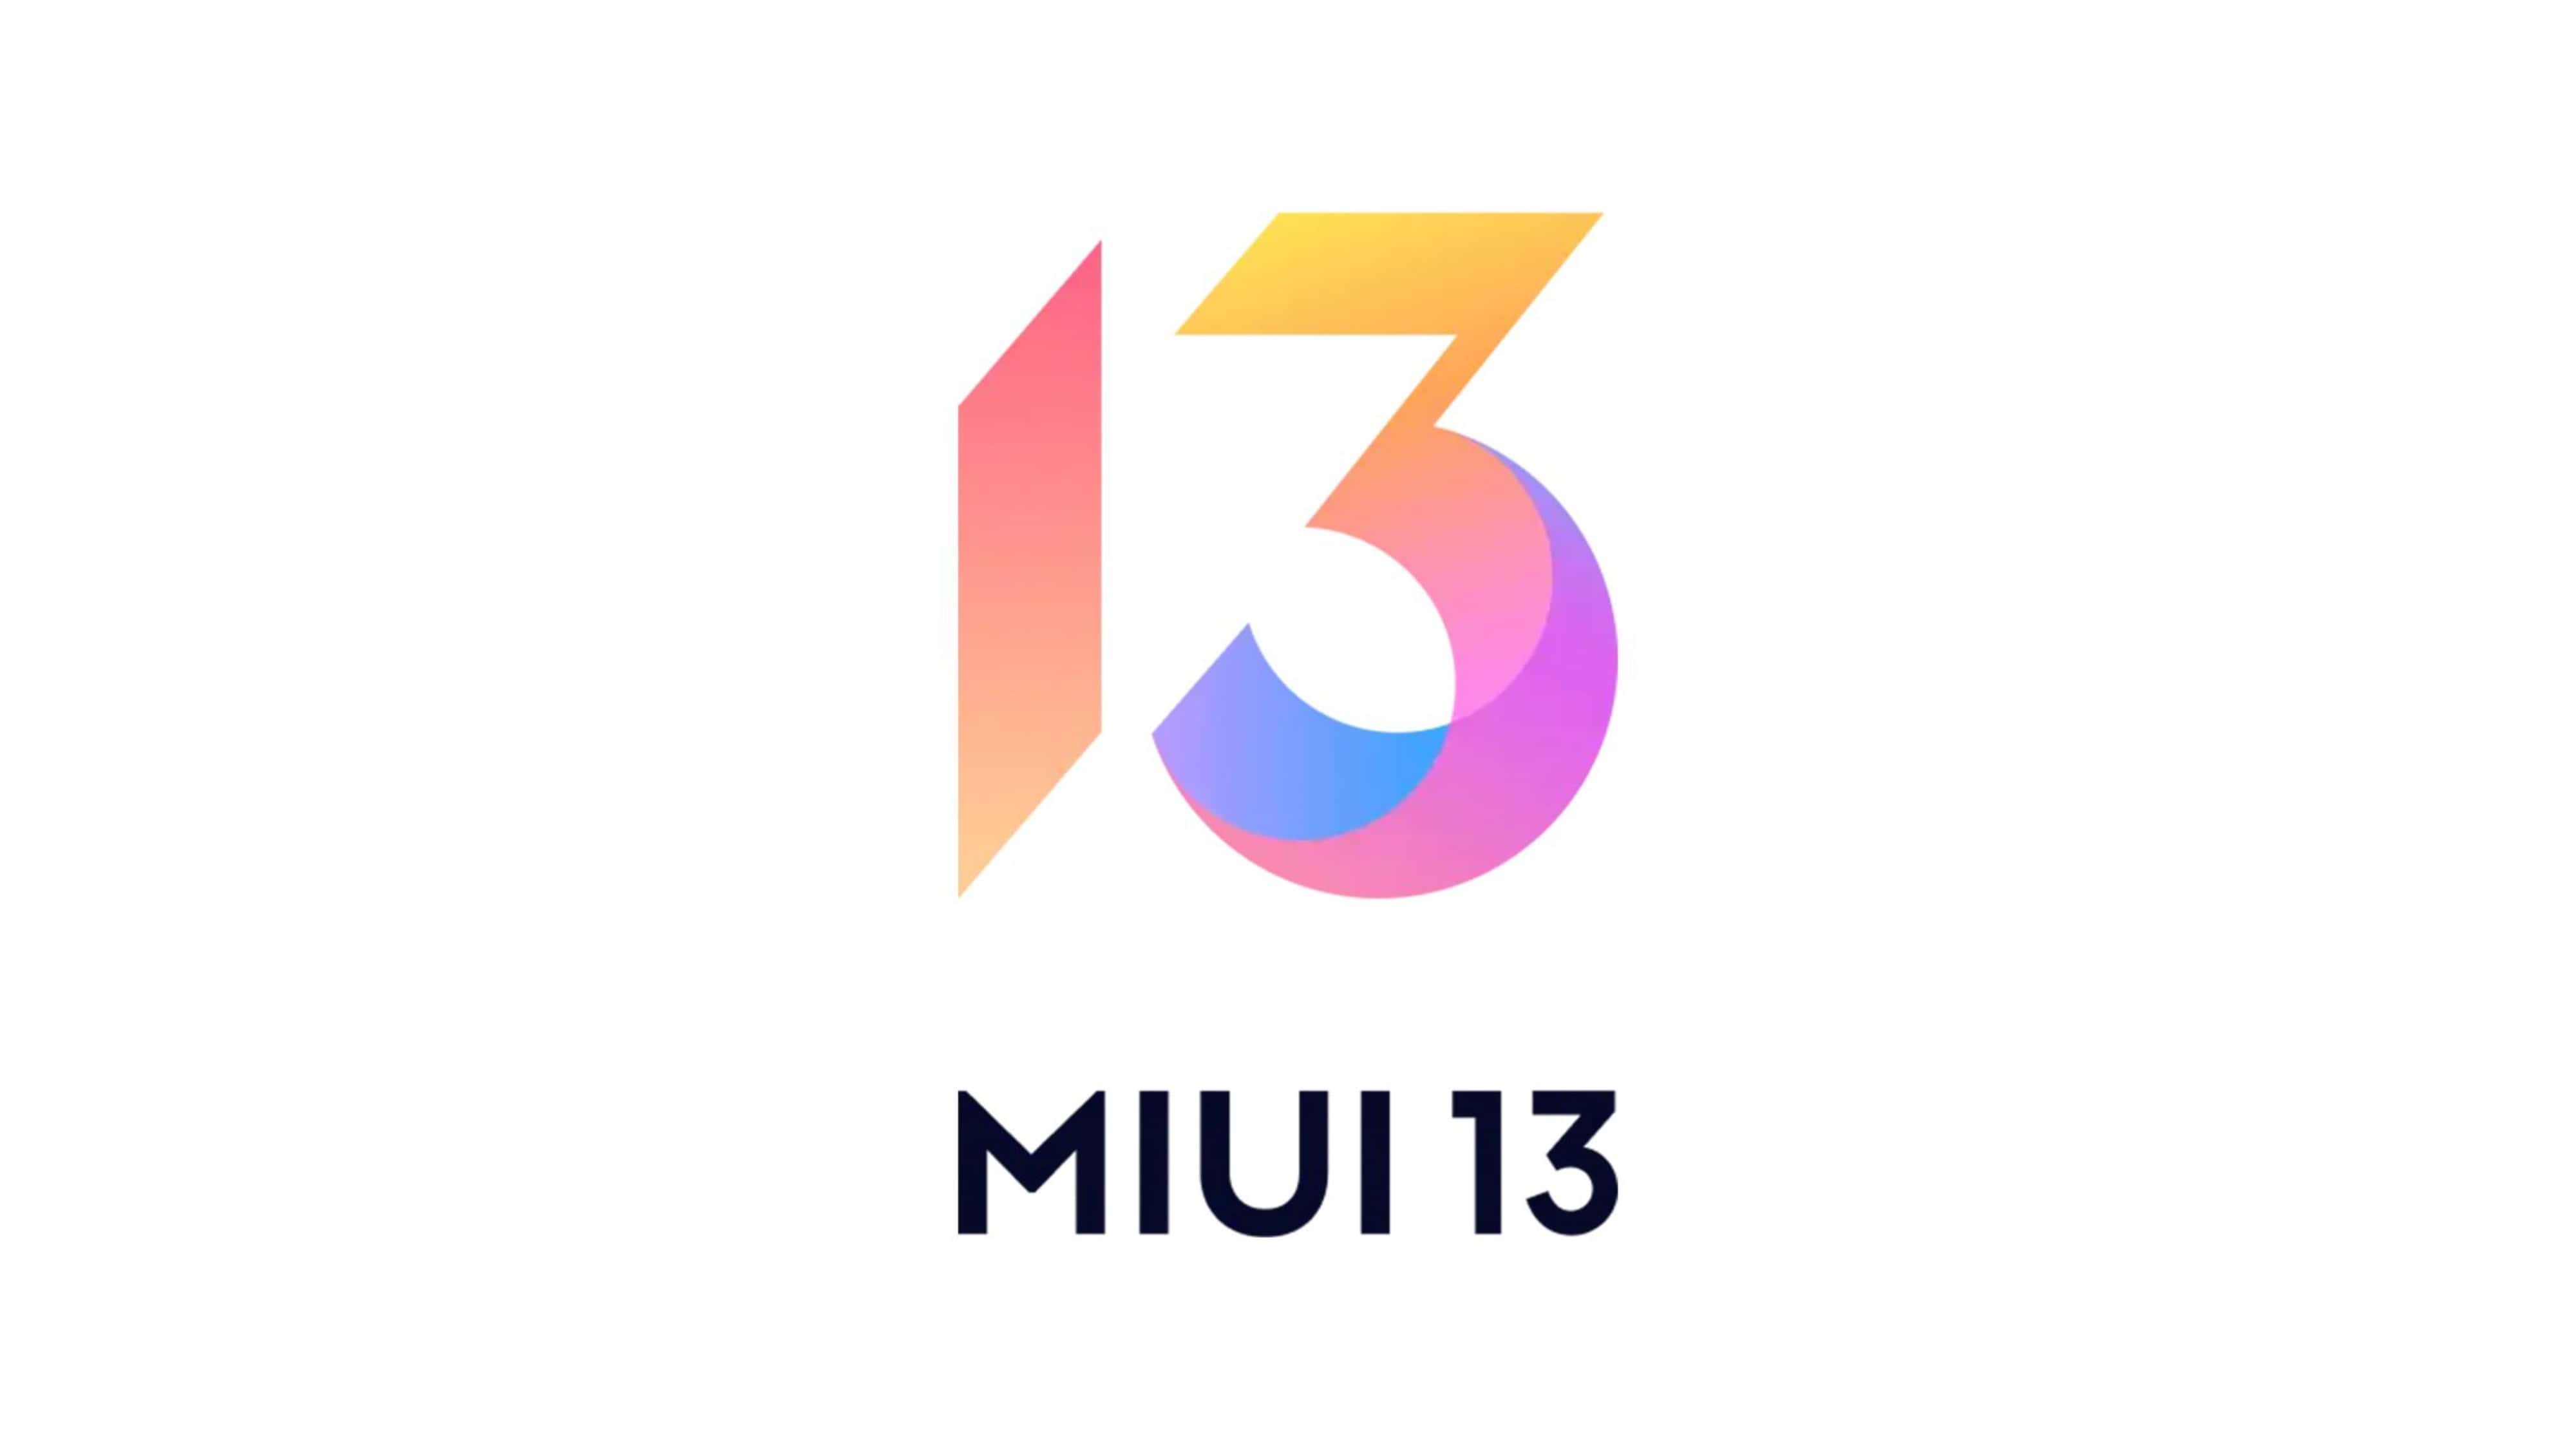 MIUI 13 Logo Featured A